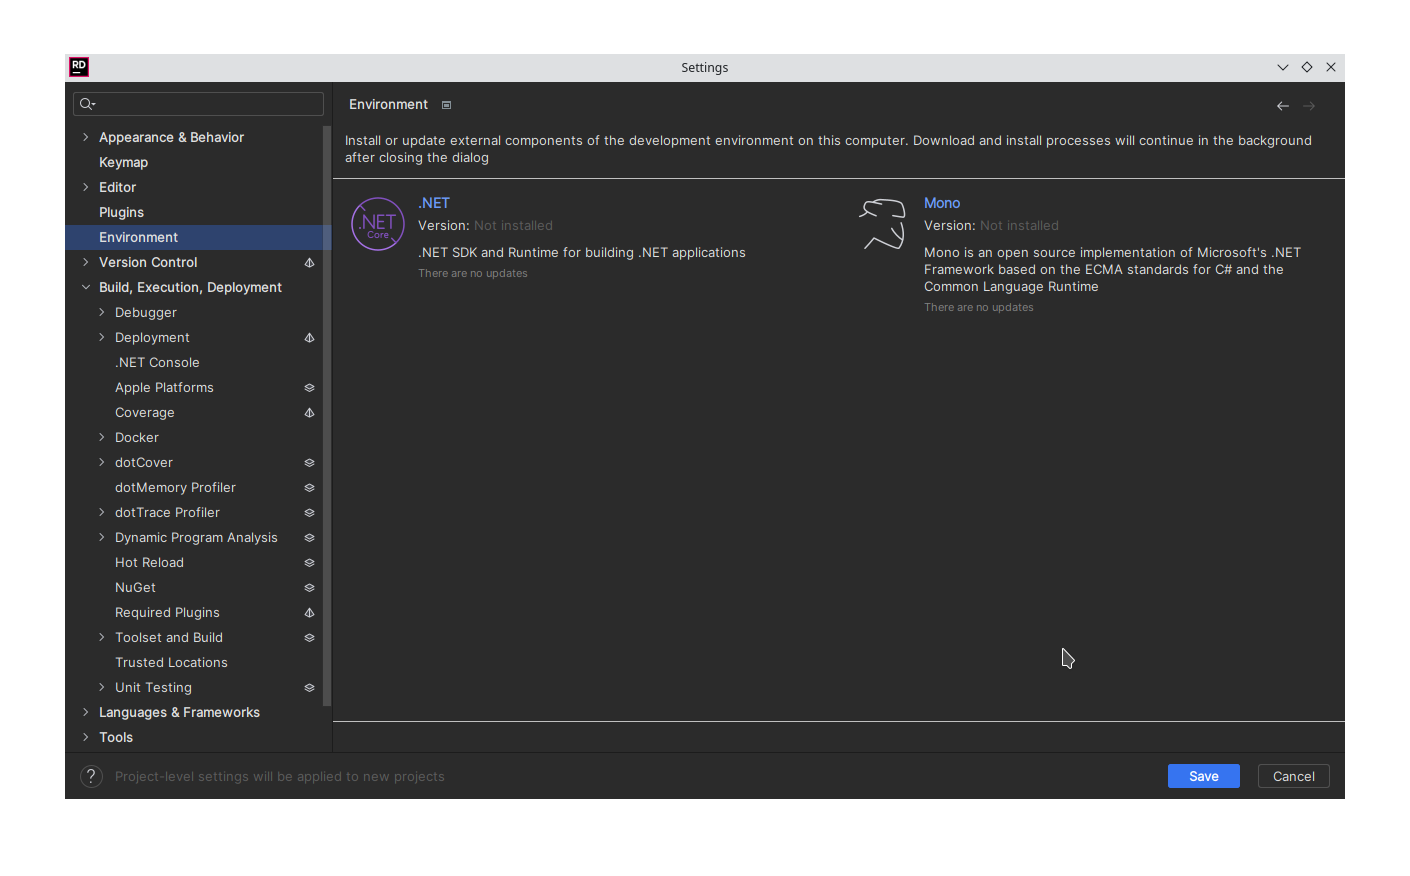 JetBrains Rider settings showing Environment window